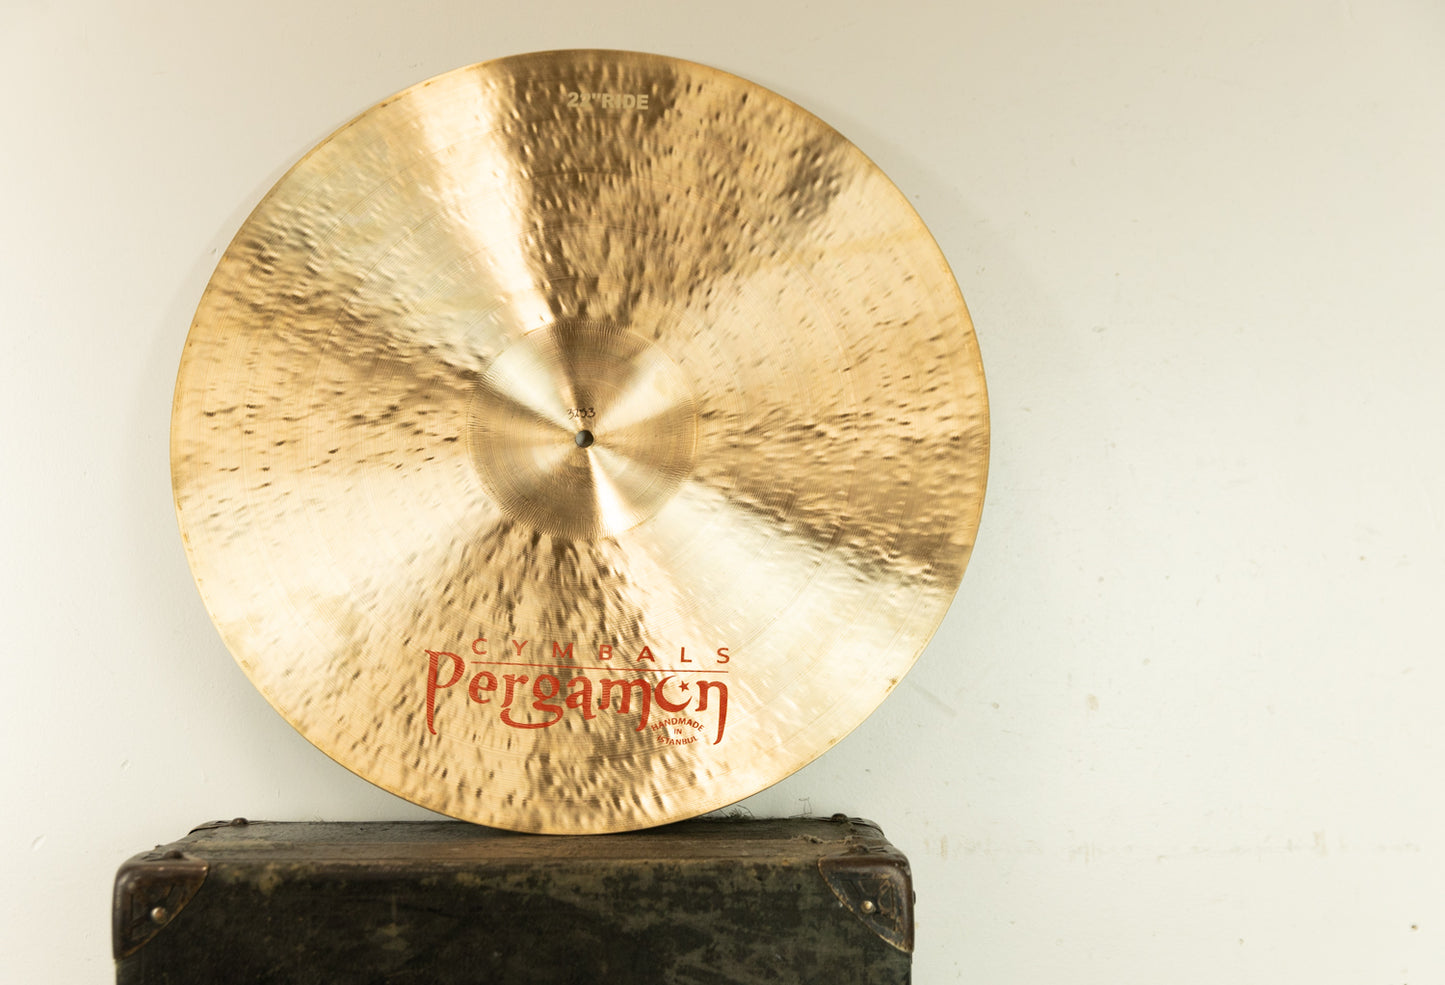 Pergamon 22" Vortex Ride Cymbal 3253g